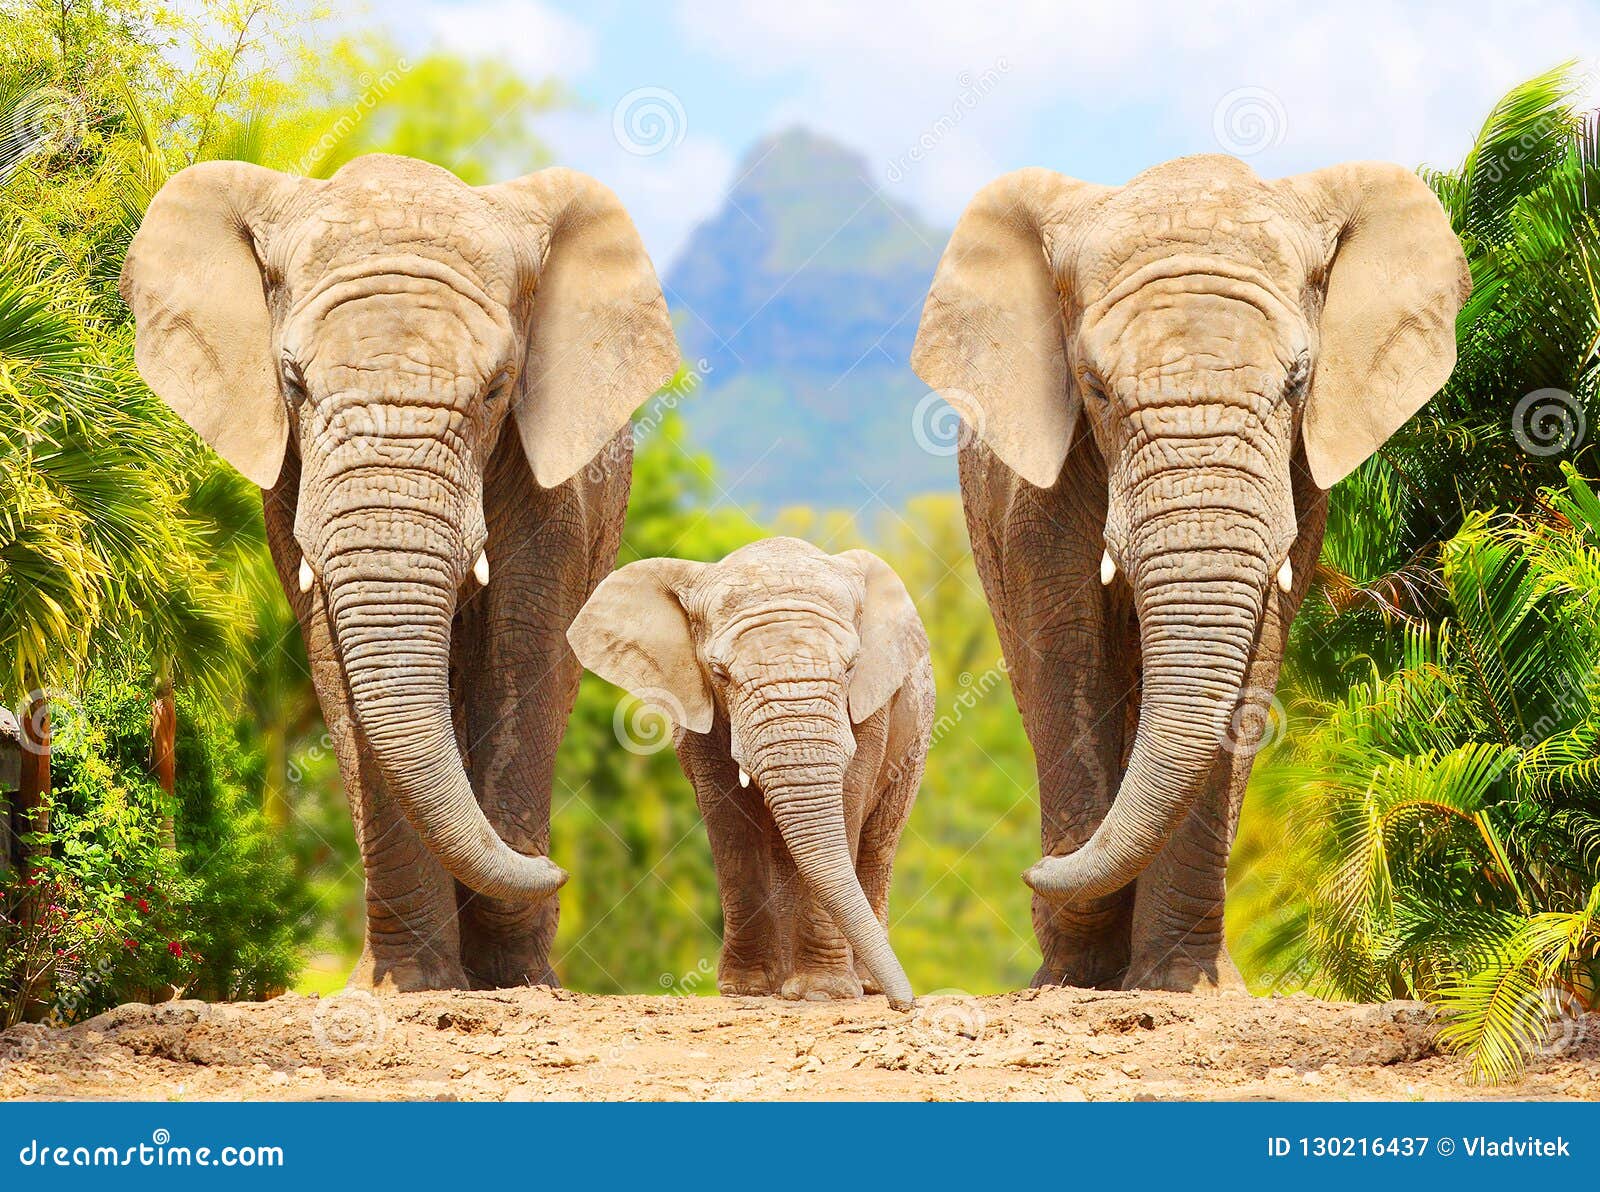 african bush elephants - loxodonta africana family.